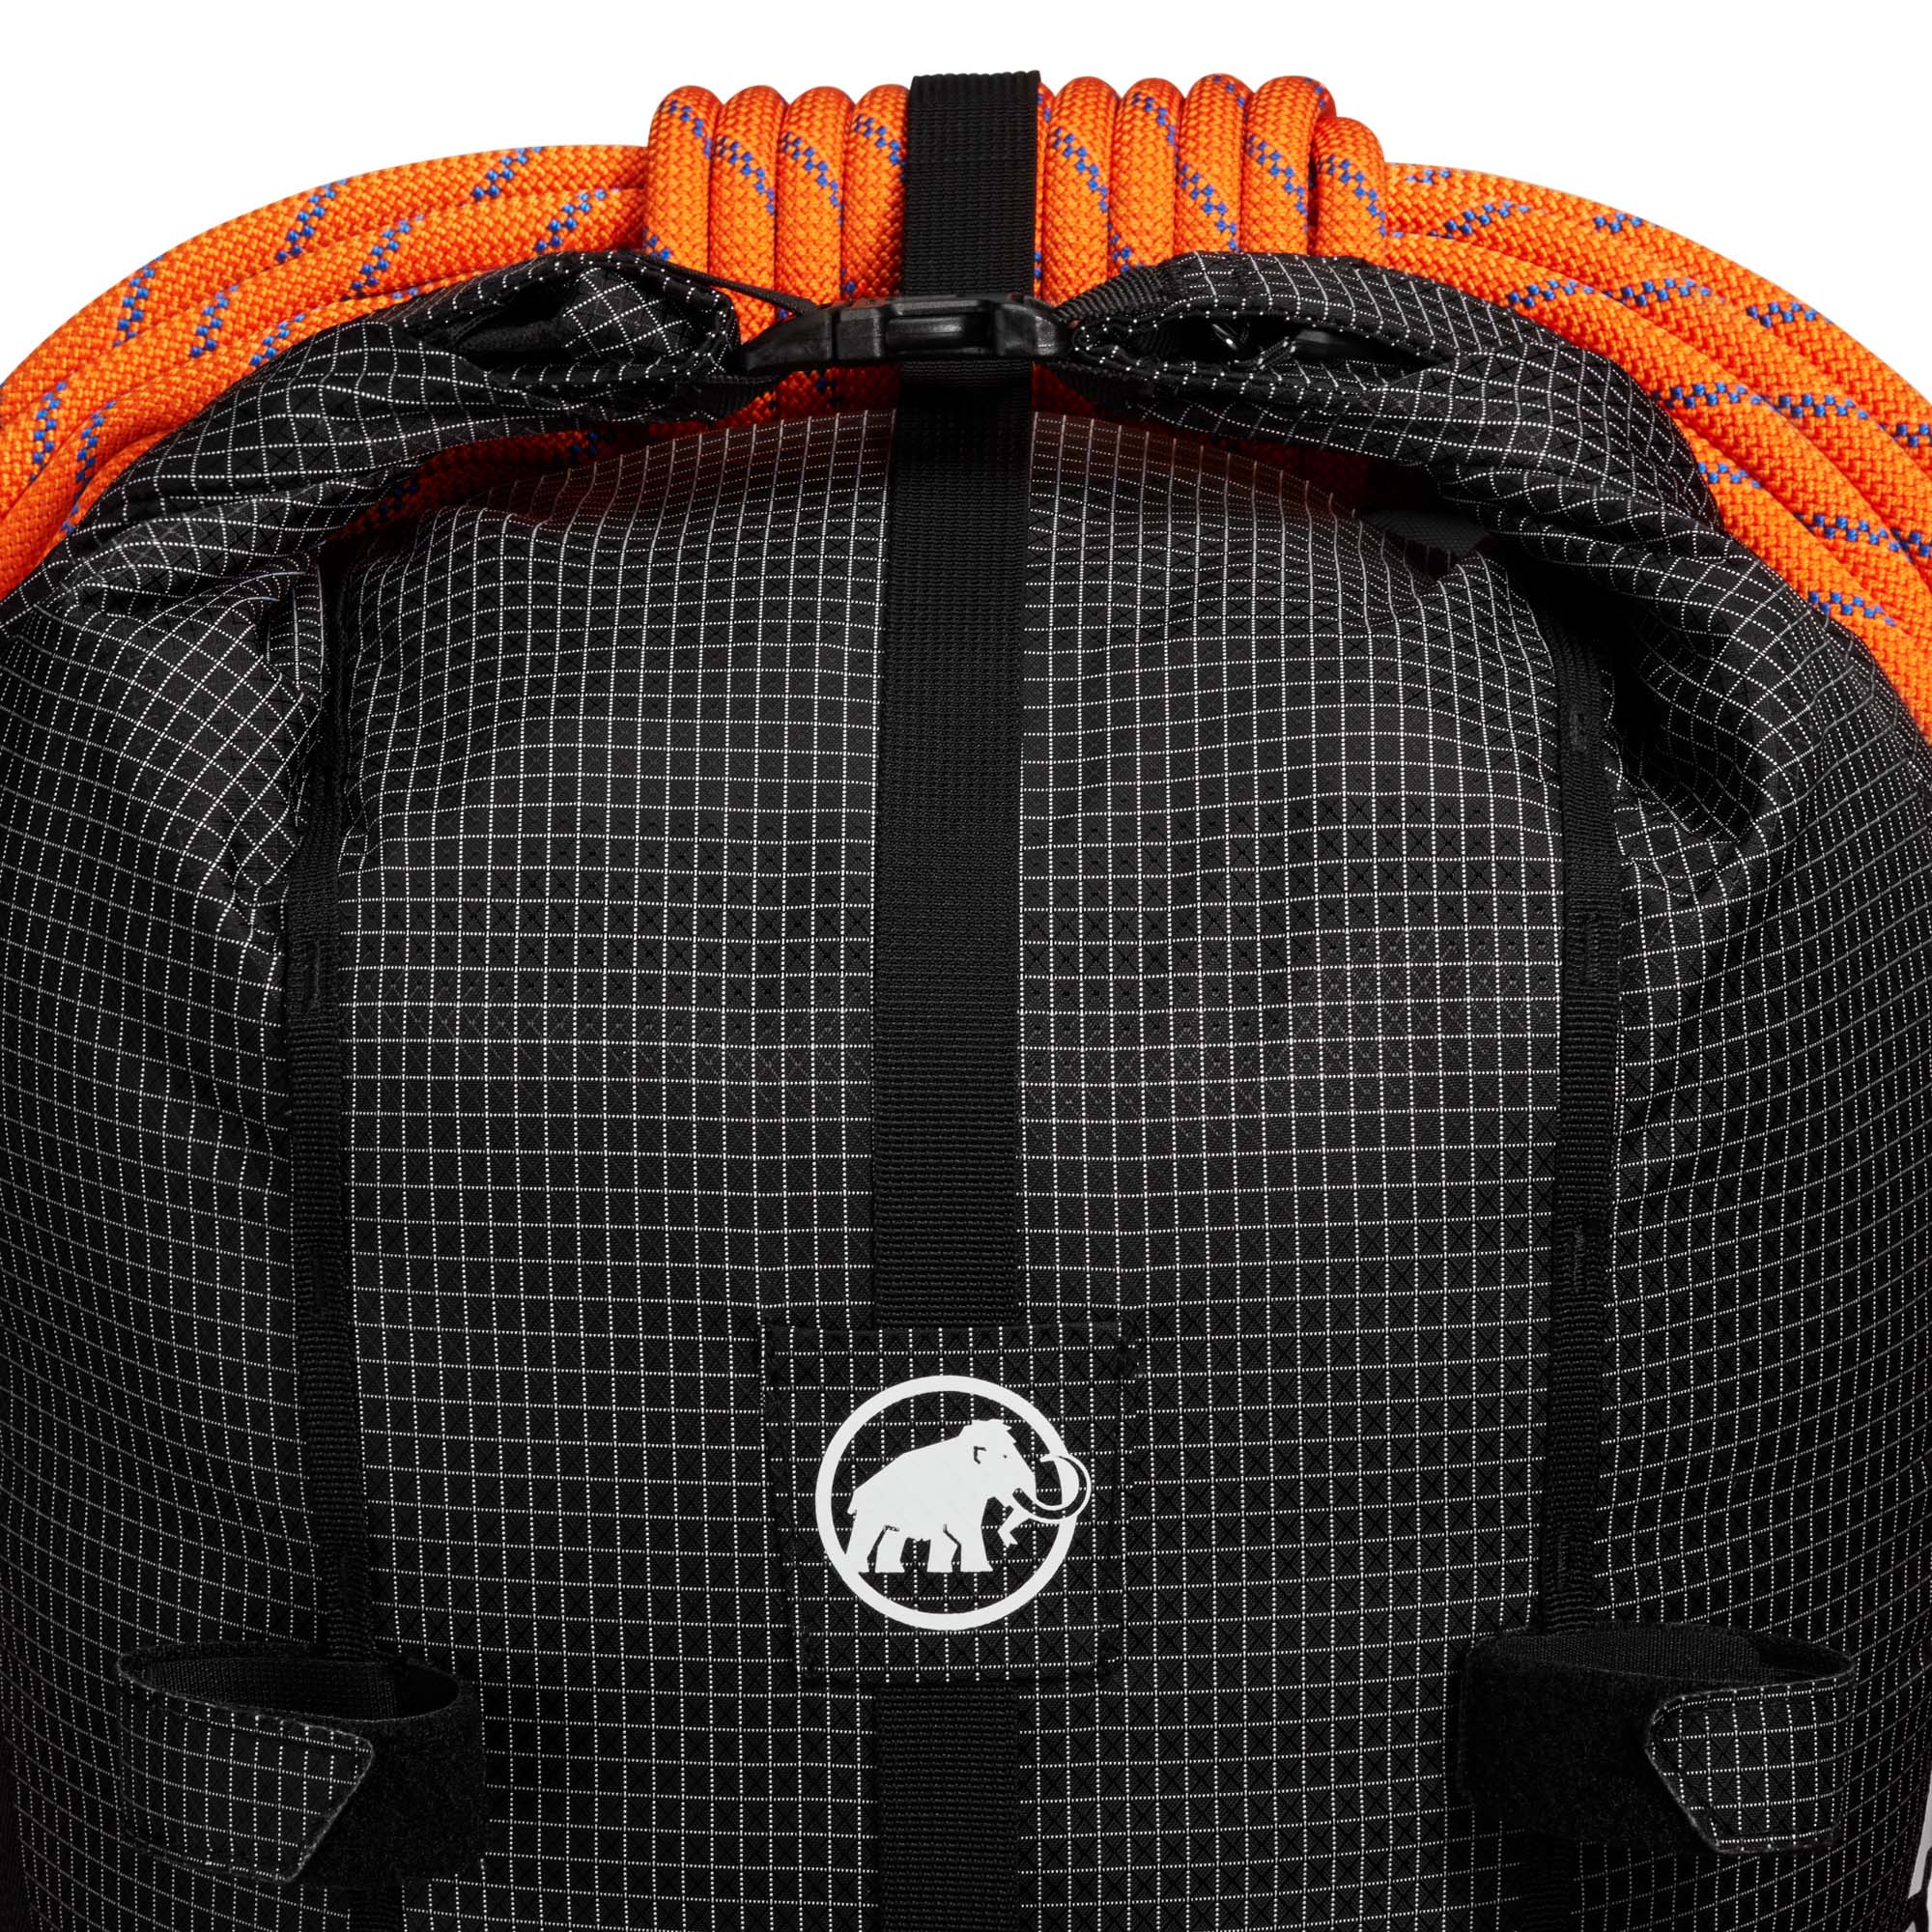 Mammut Trion 28 Alpine/Trekking Backpack